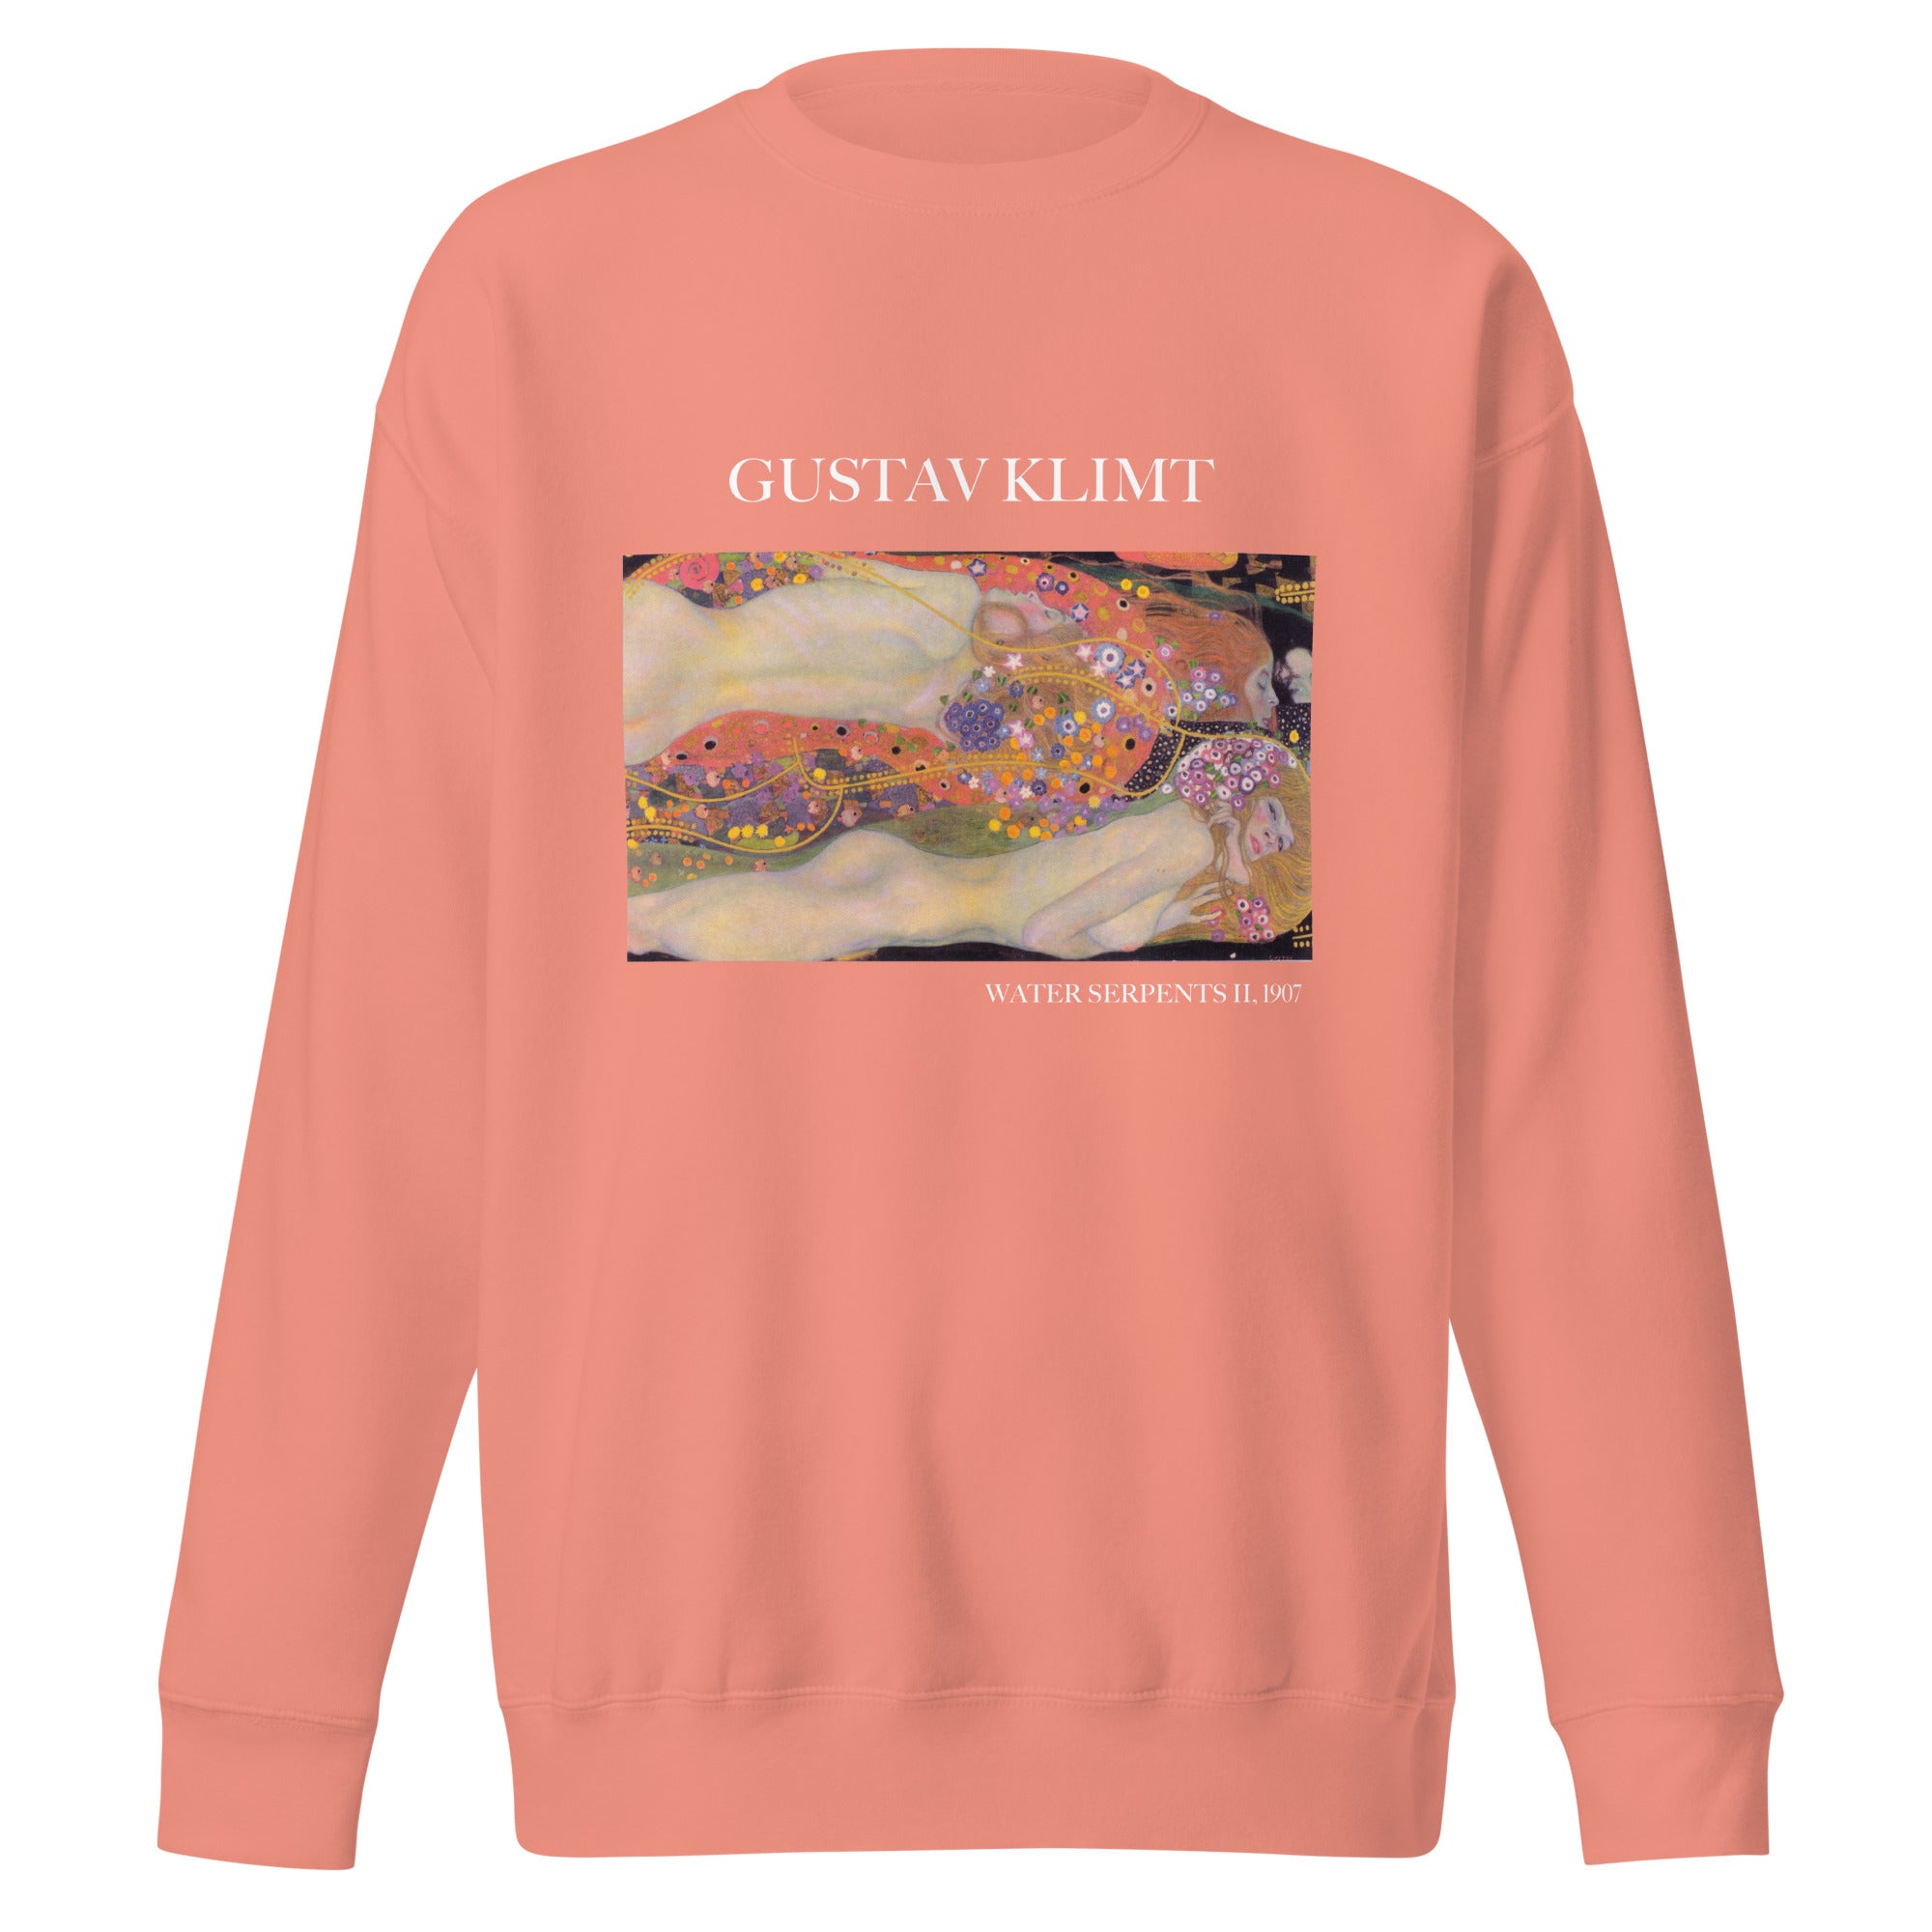 Gustav Klimt 'Water Serpents II' Famous Painting Sweatshirt | Unisex Premium Sweatshirt